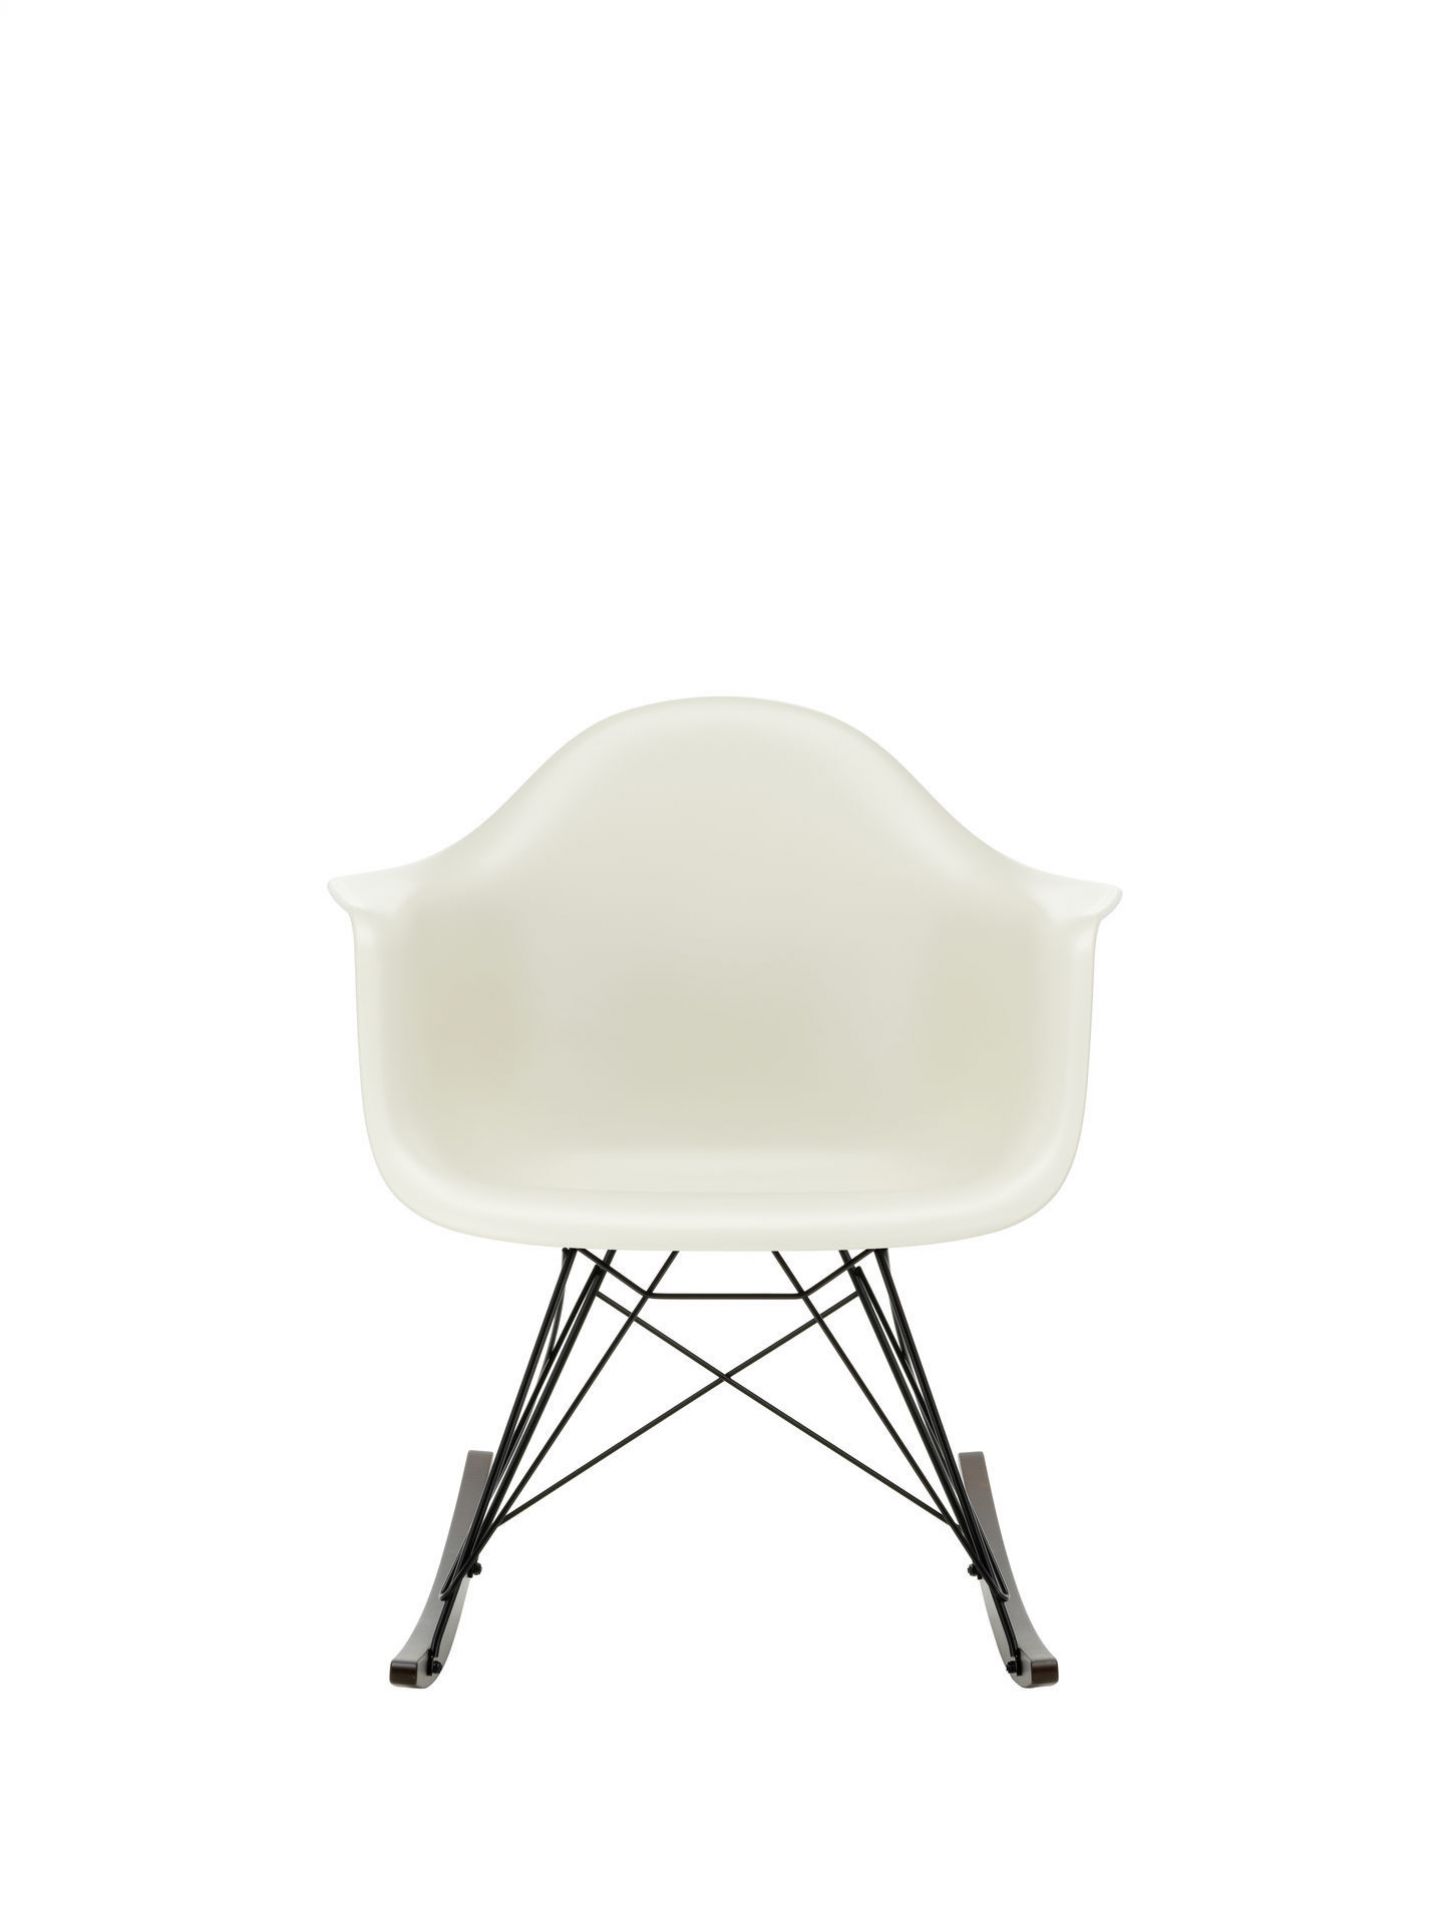 Eames Plastic Arm Rocking Chair RAR Schaukelstuhl Vitra